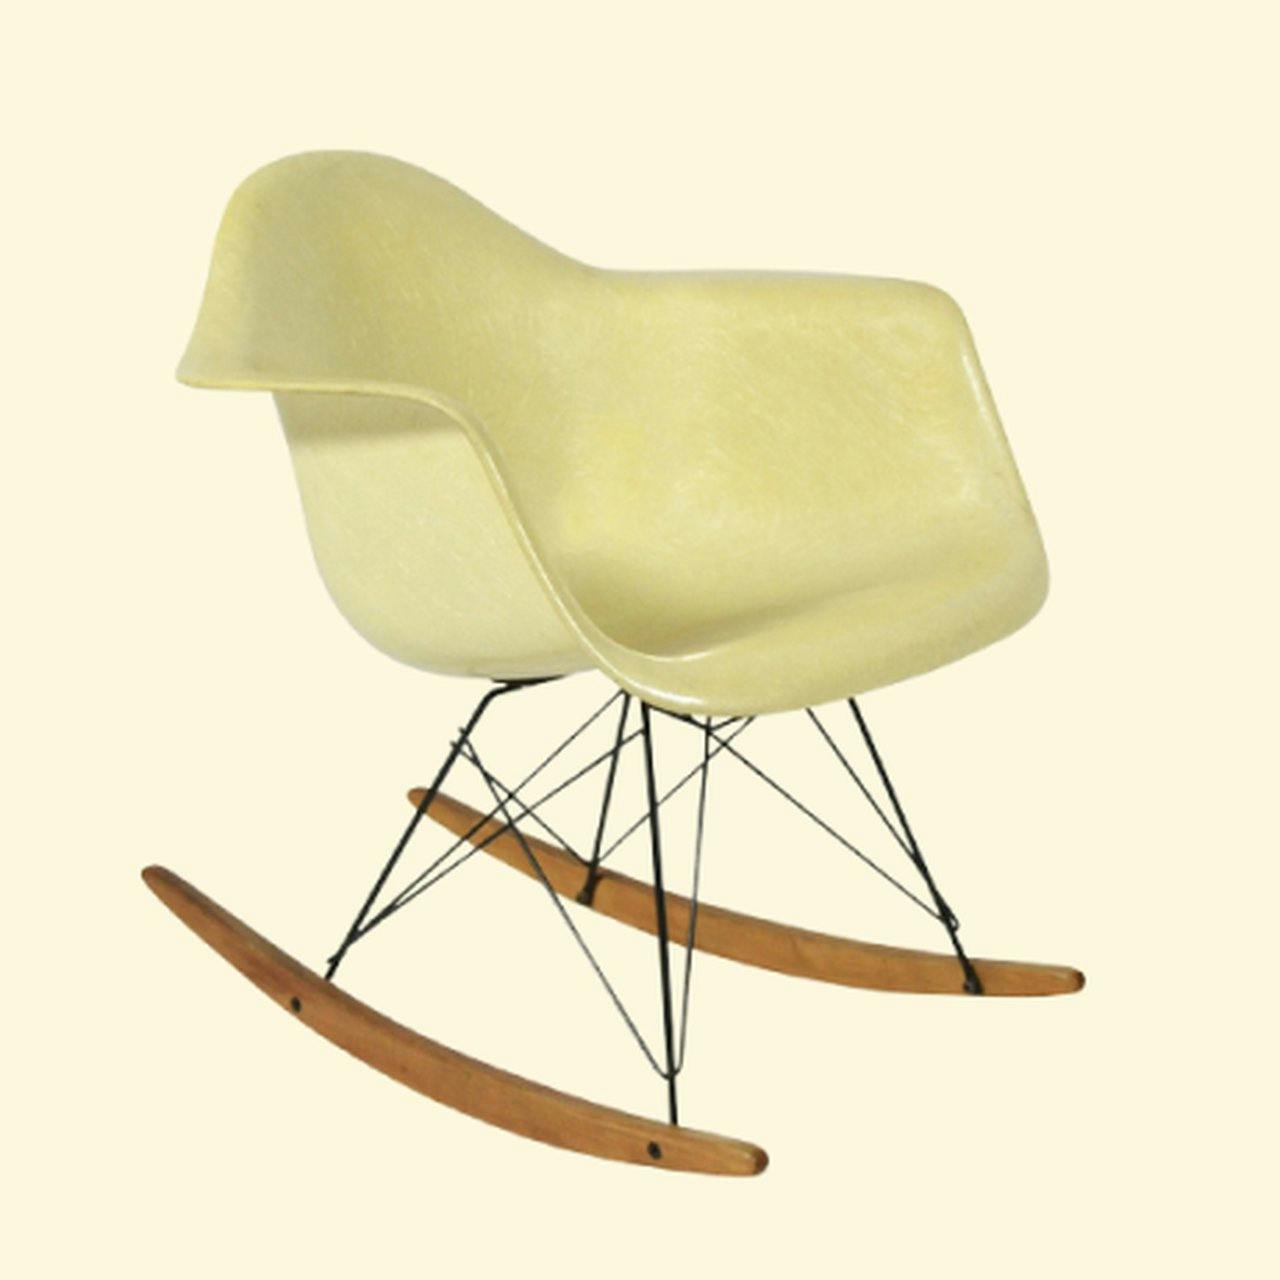 Italian Design Rocking chairs